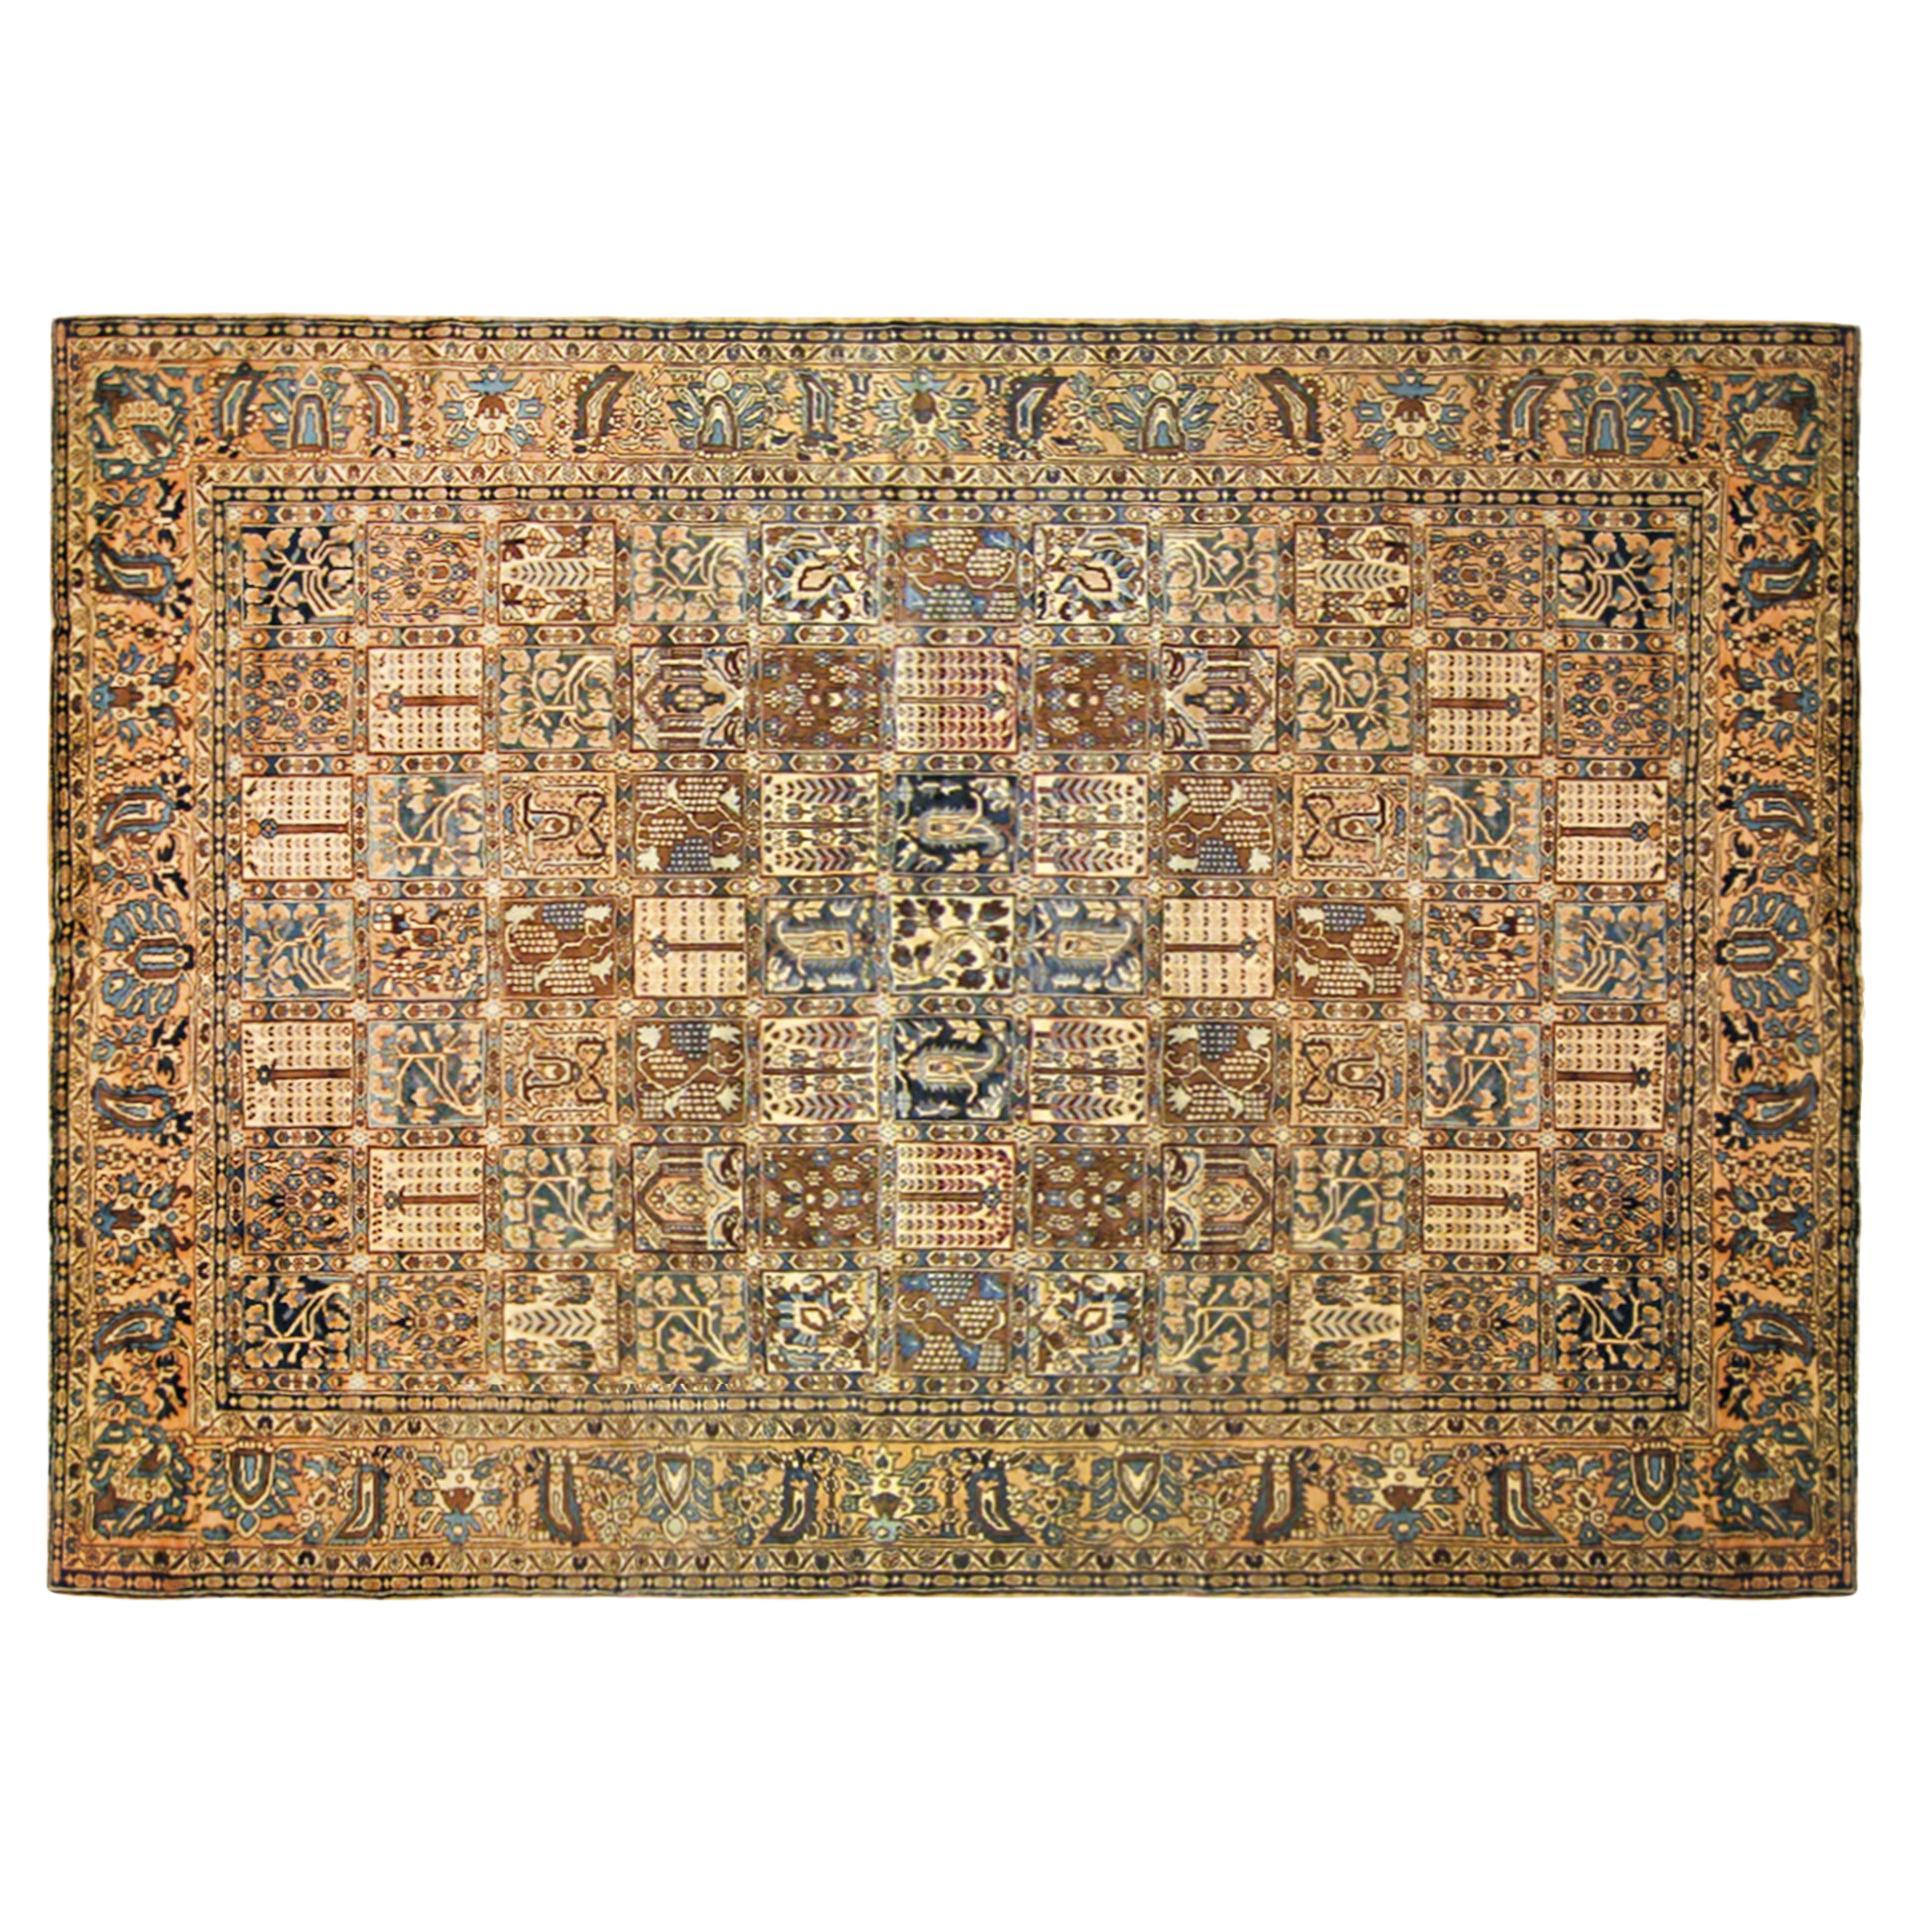 Antique Persian Baktiari Oriental Rug, in Room size, w/ Garden Design For Sale